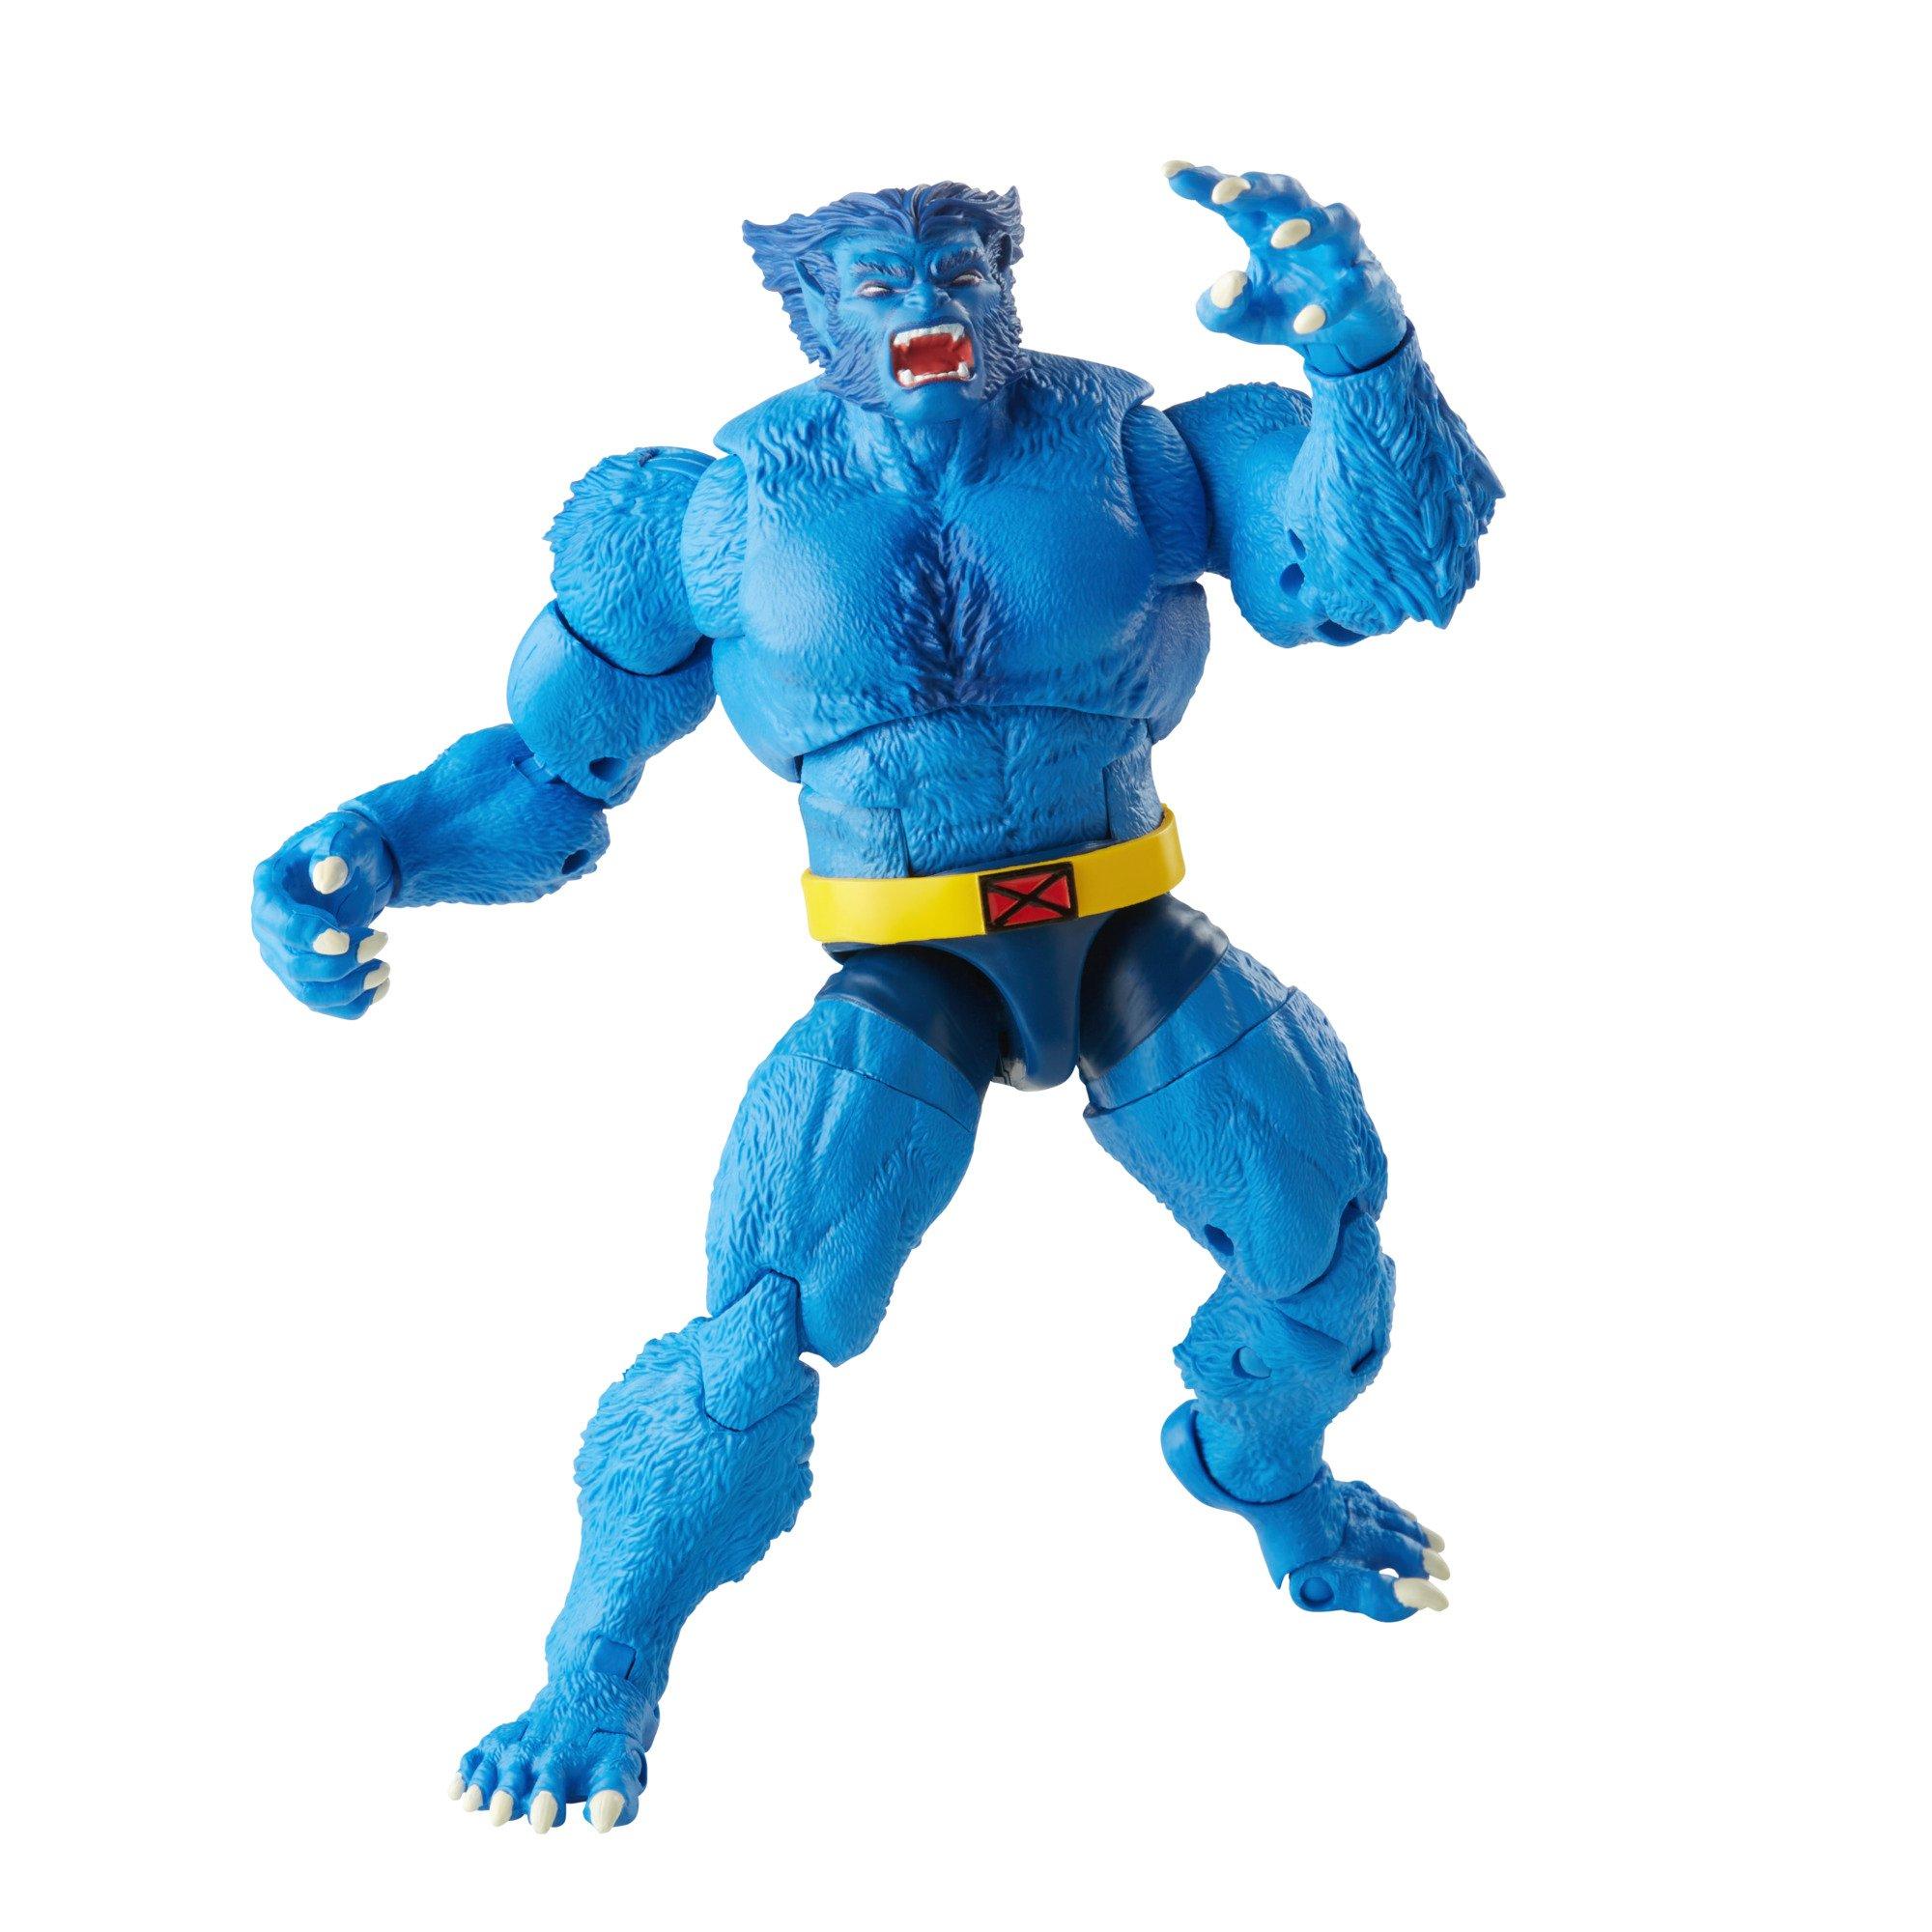 Hasbro E5325 Marvel Legends Beast 6 inch Action Figure for sale online 